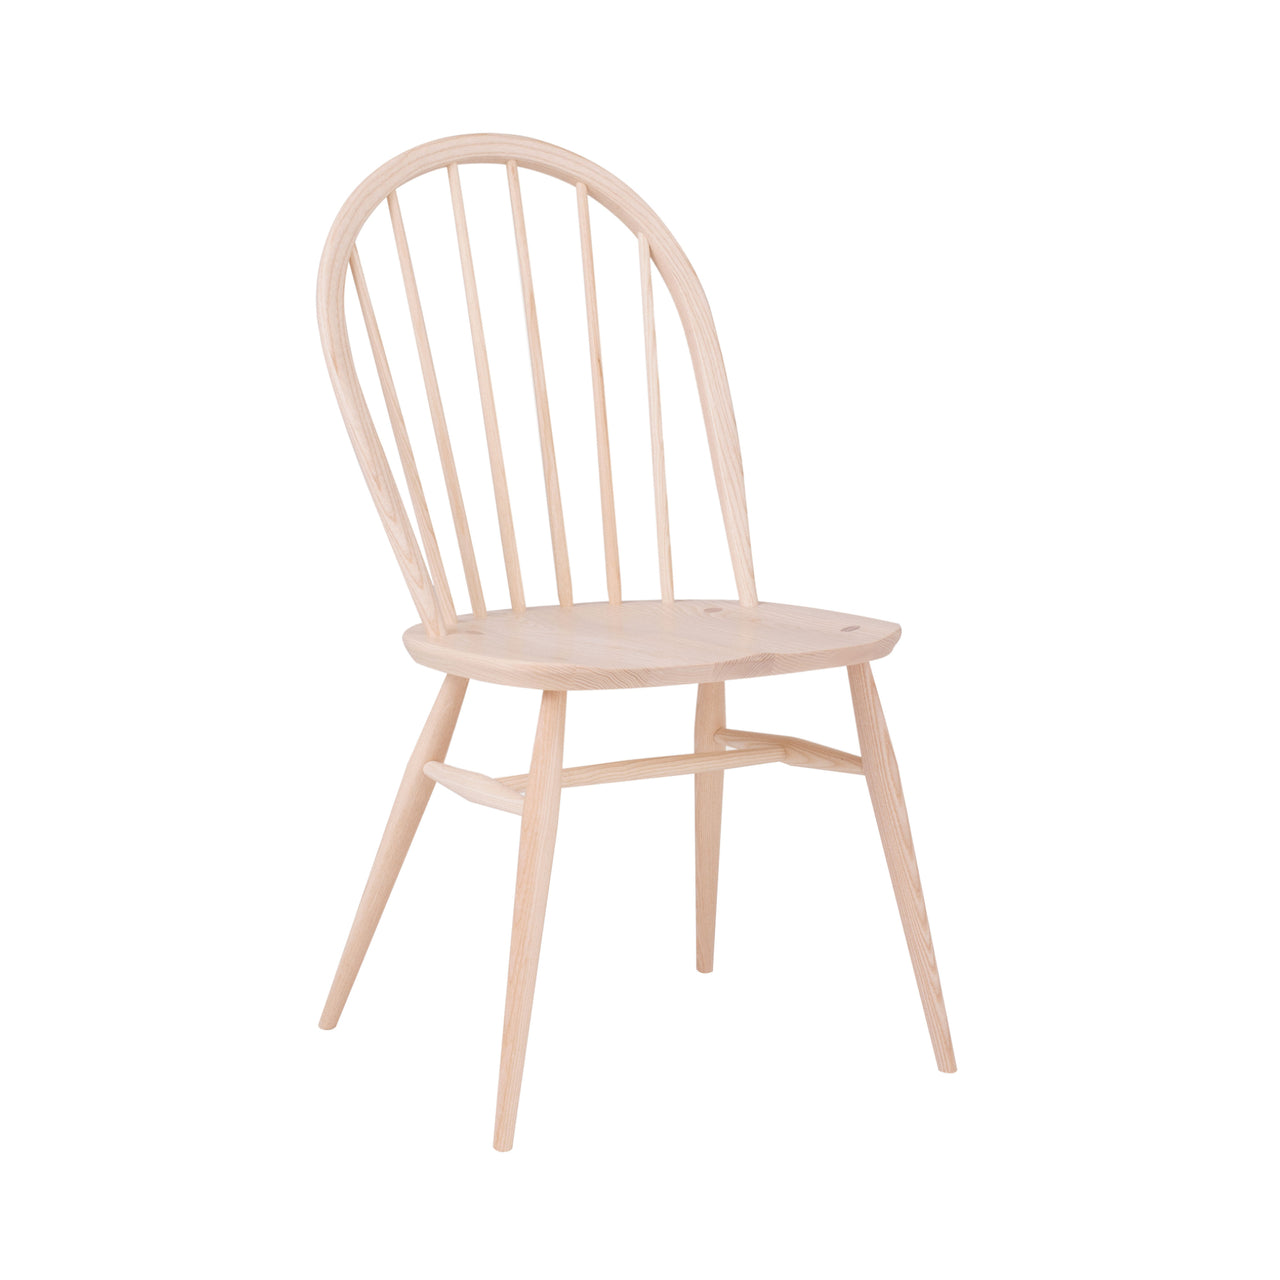 Originals Utility Dining Chair: Natural Ash